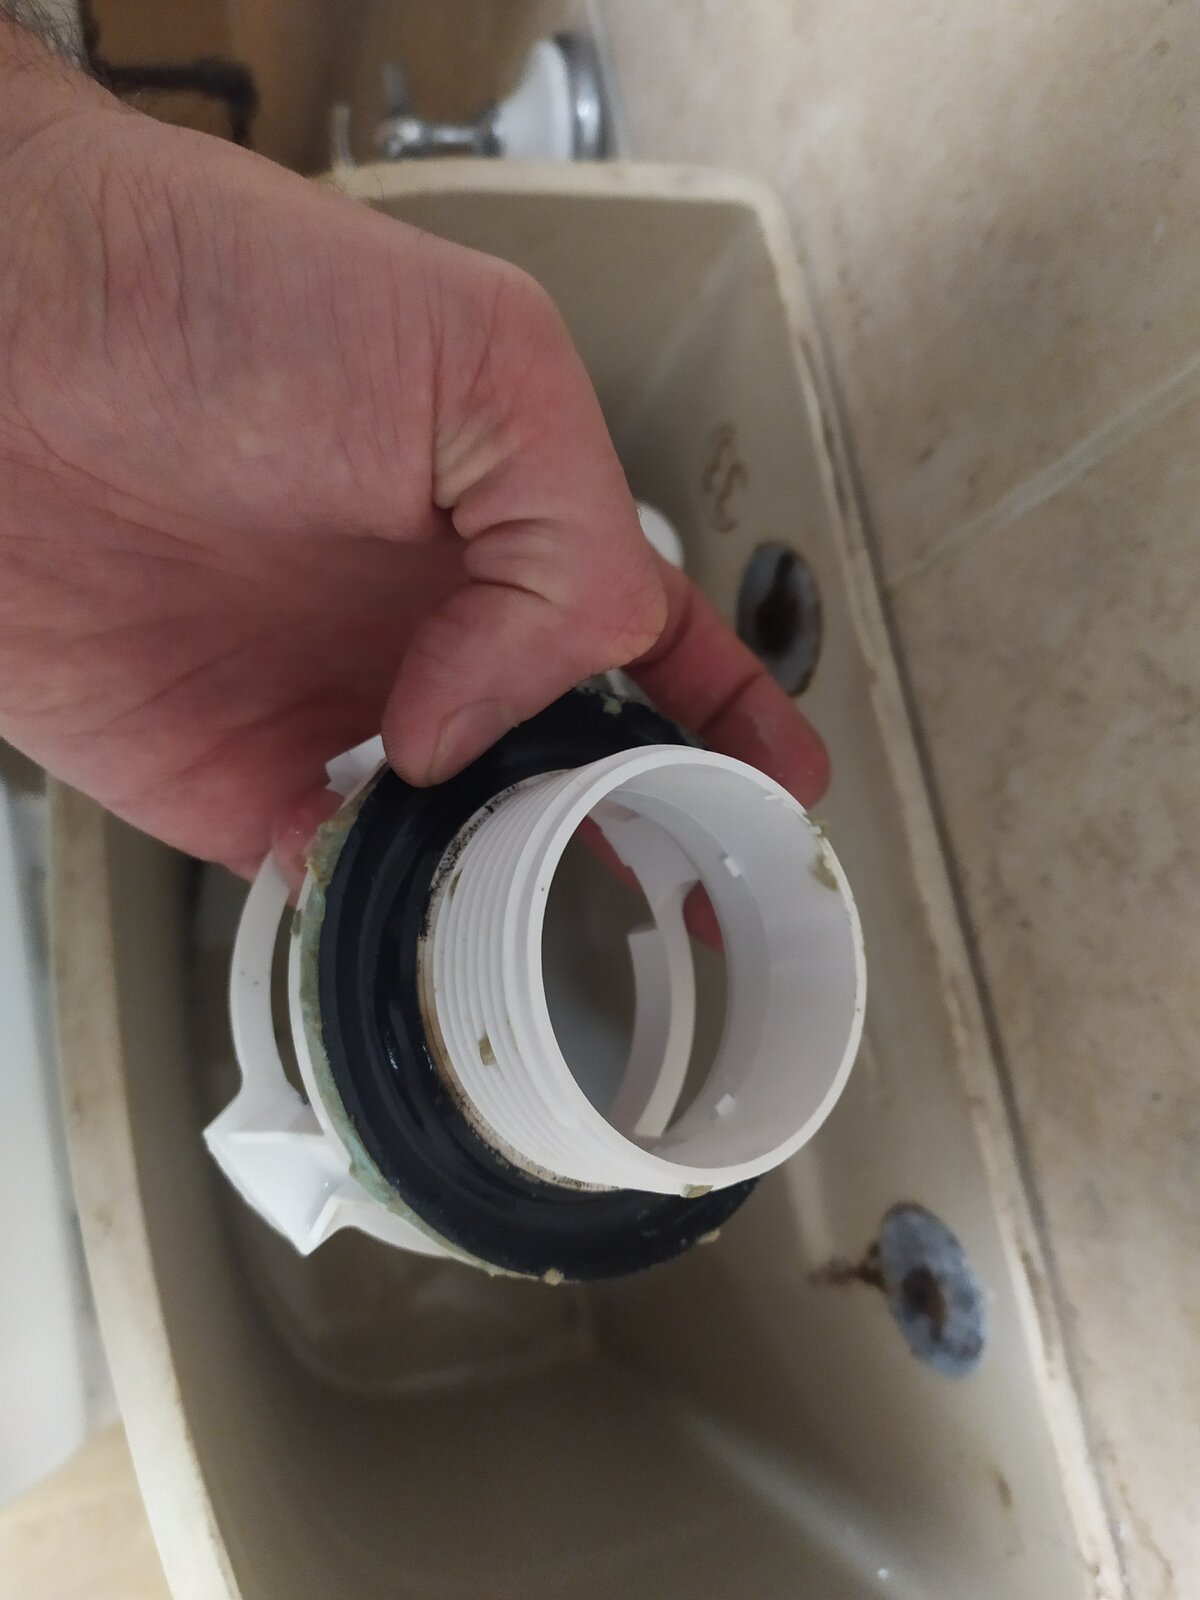 Toilet cistern slow leak | DIYnot Forums